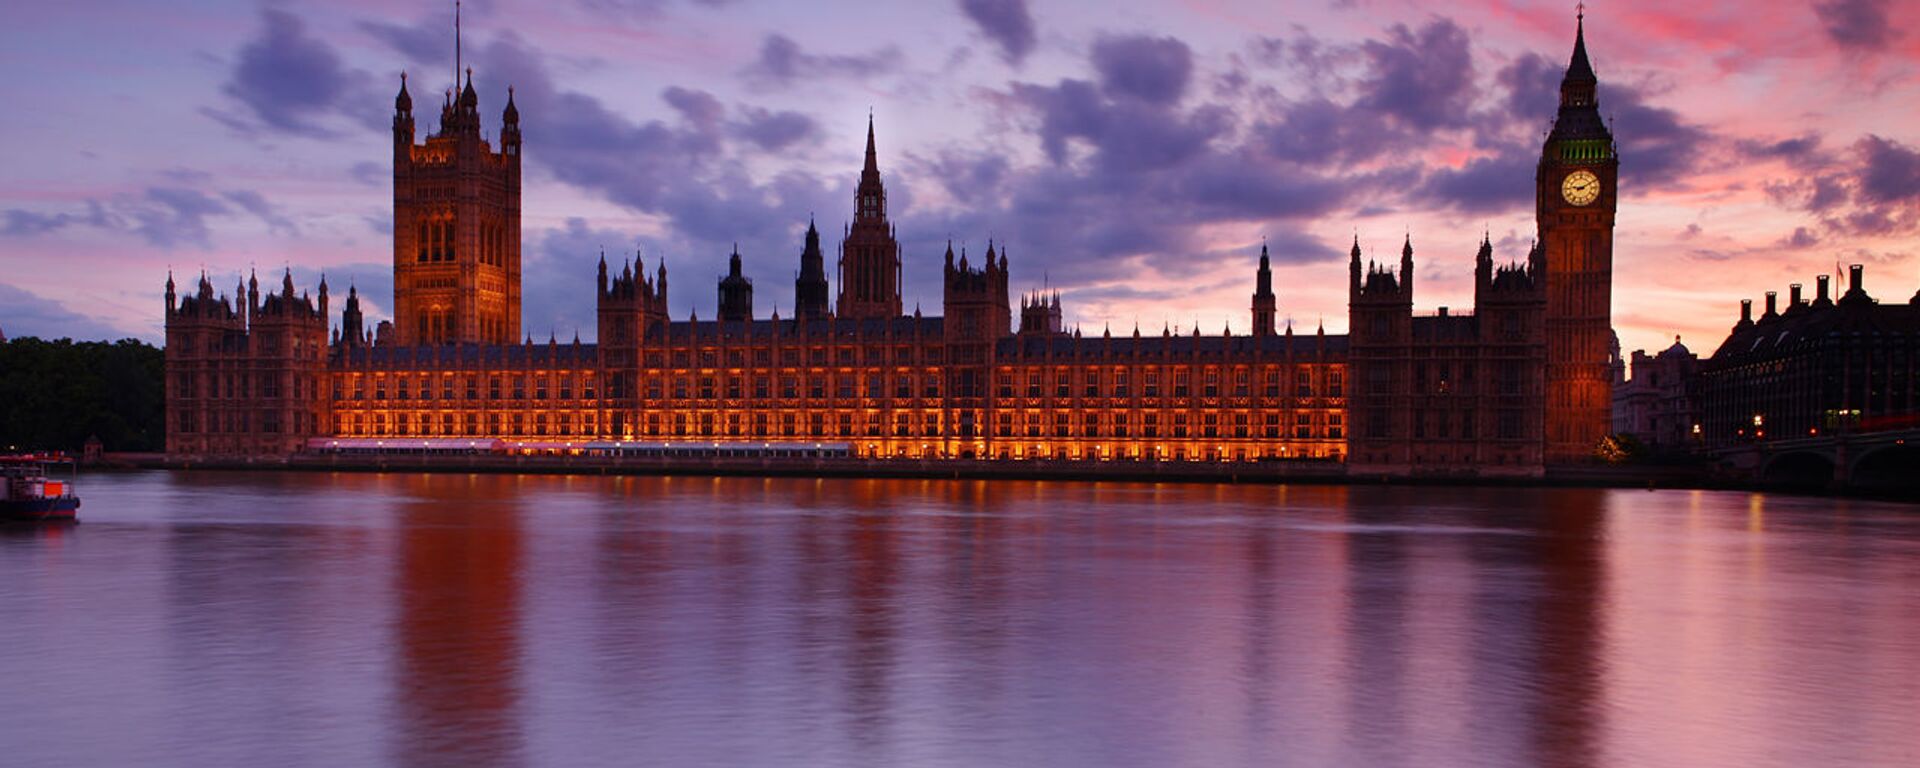 Houses of Parliament at dusk, London, UK - Sputnik International, 1920, 25.11.2022